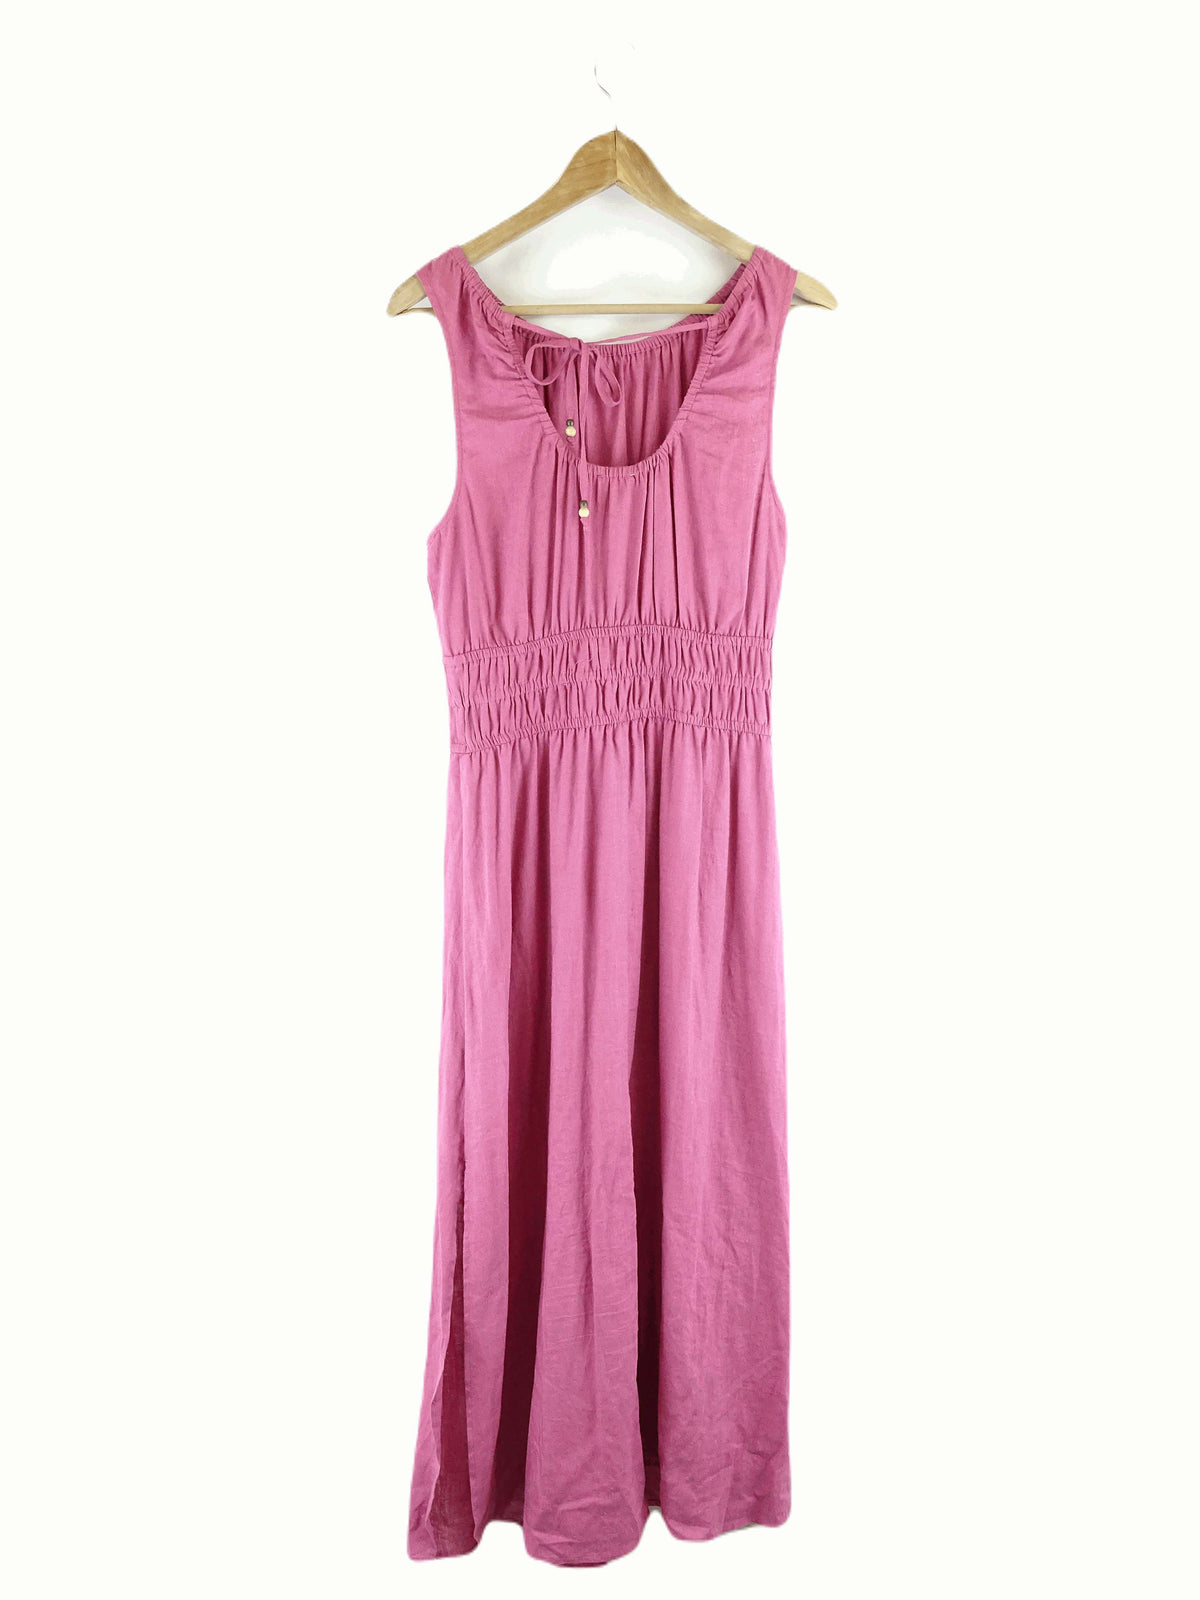 Boutique Pink Linen Dress 8